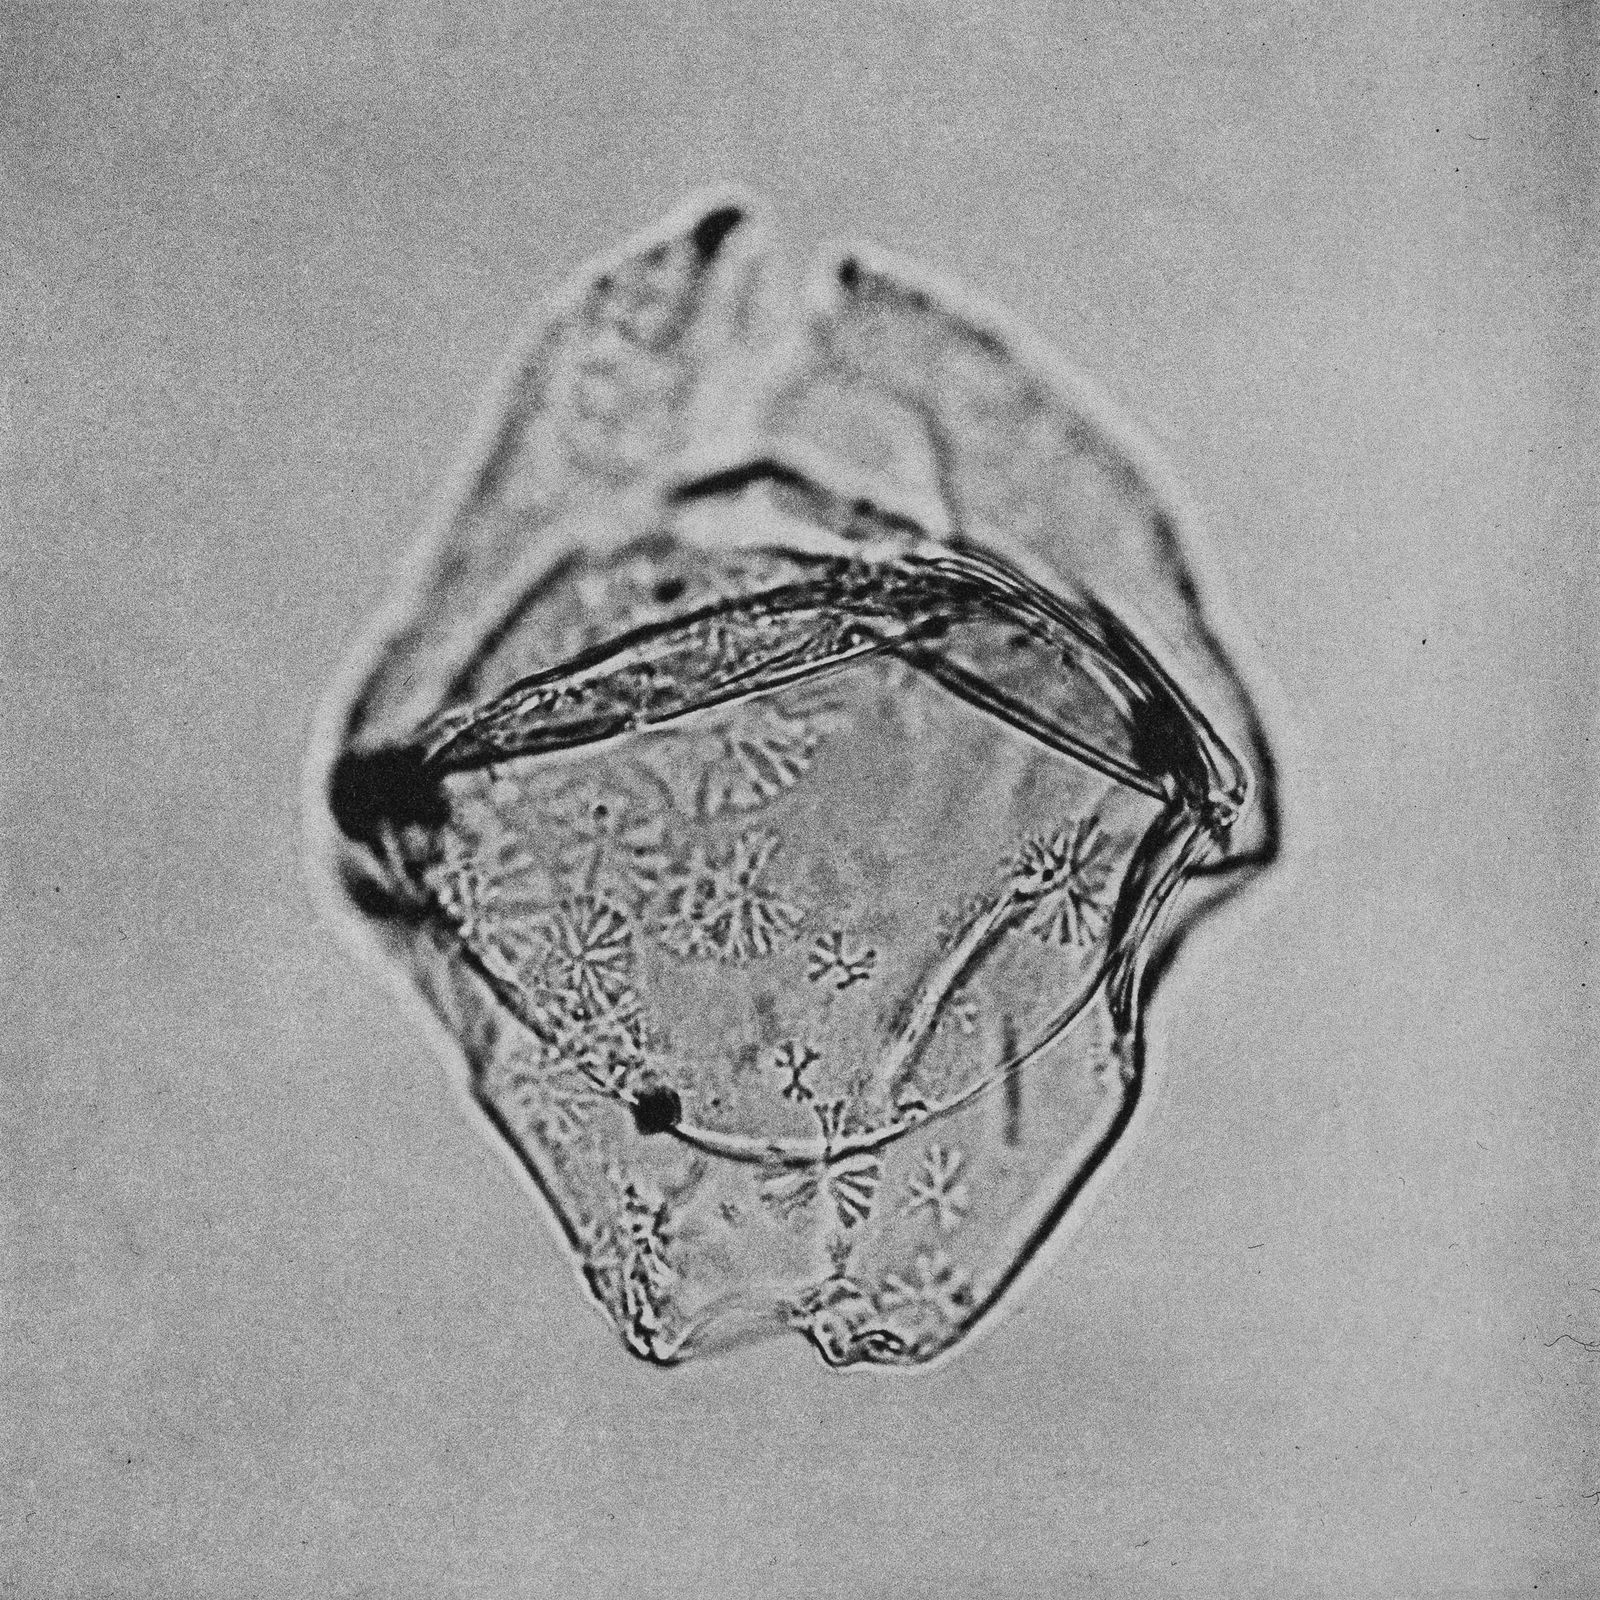 © suzette bousema - Manumiella seelandica From the project 'Dinoflagellates'